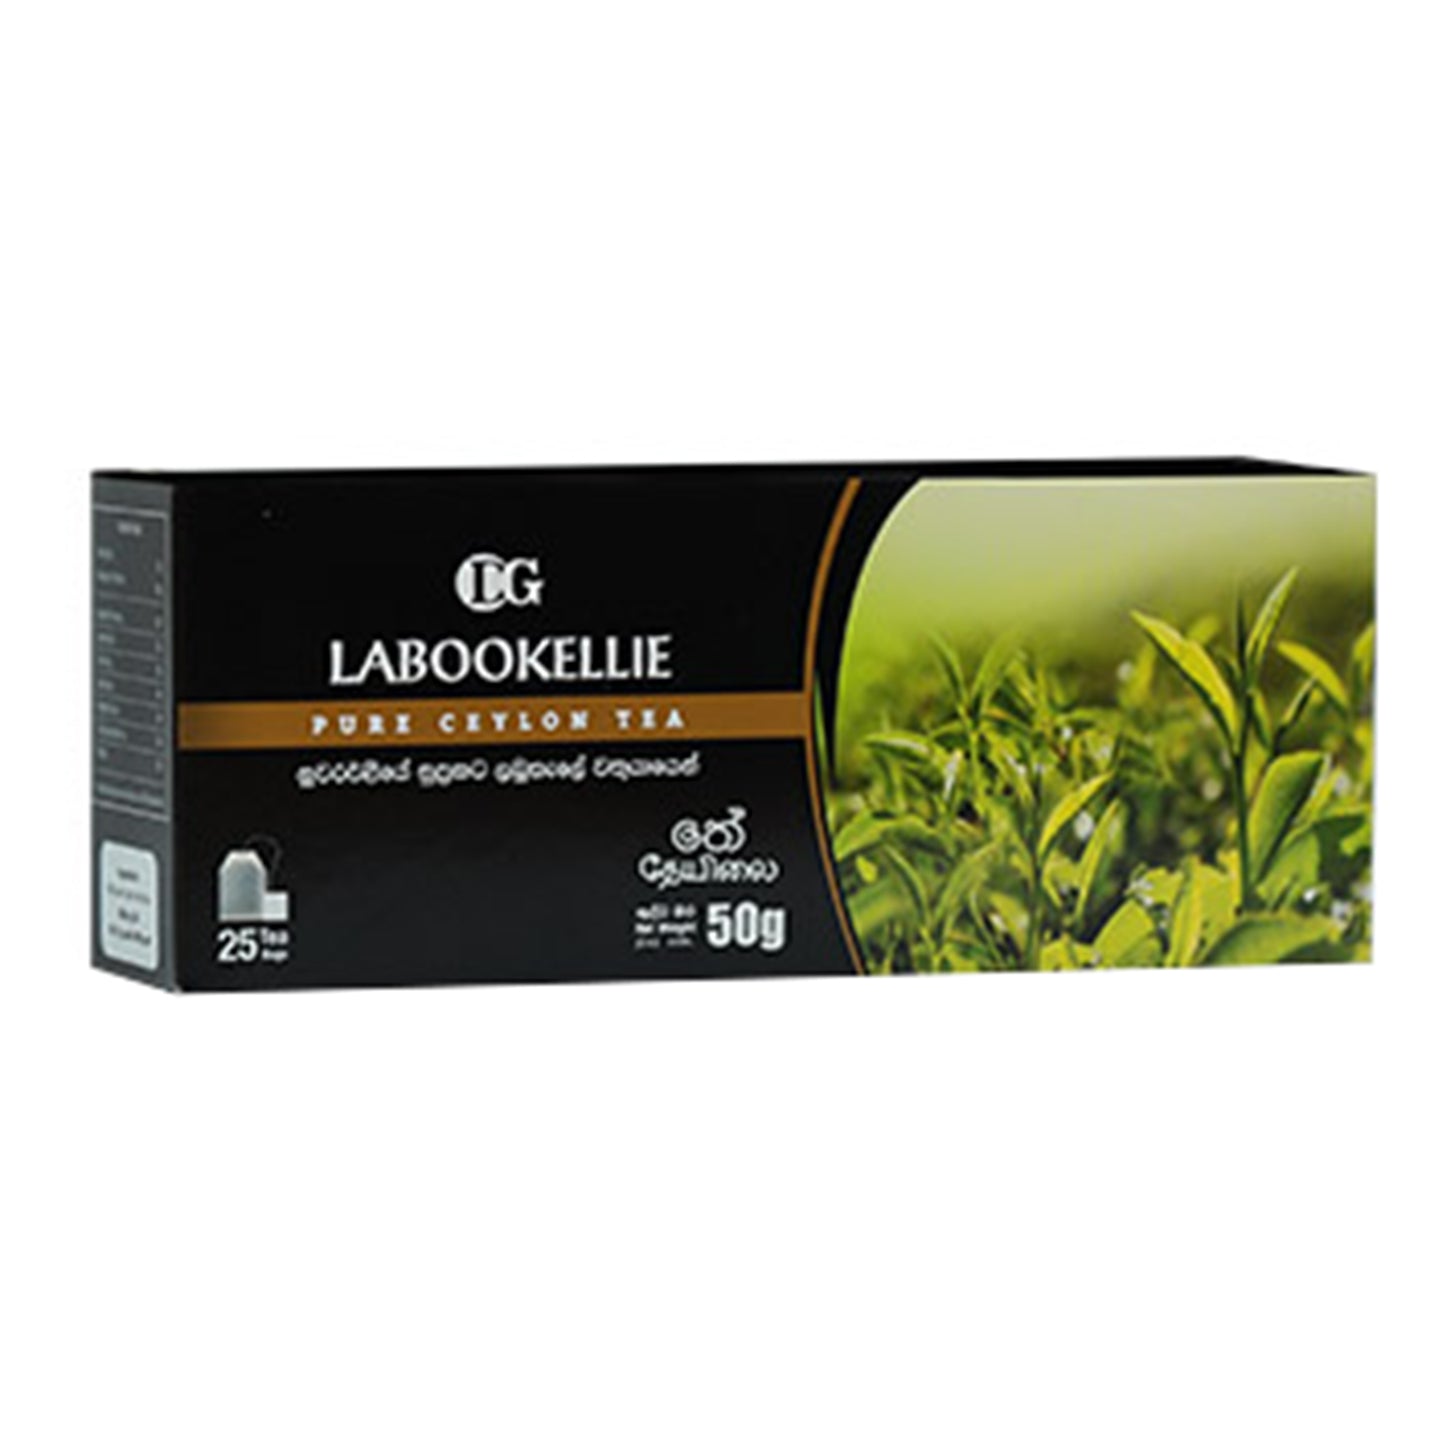 DG Labookellie Ceylon zwarte thee (50 g) 25 theezakjes